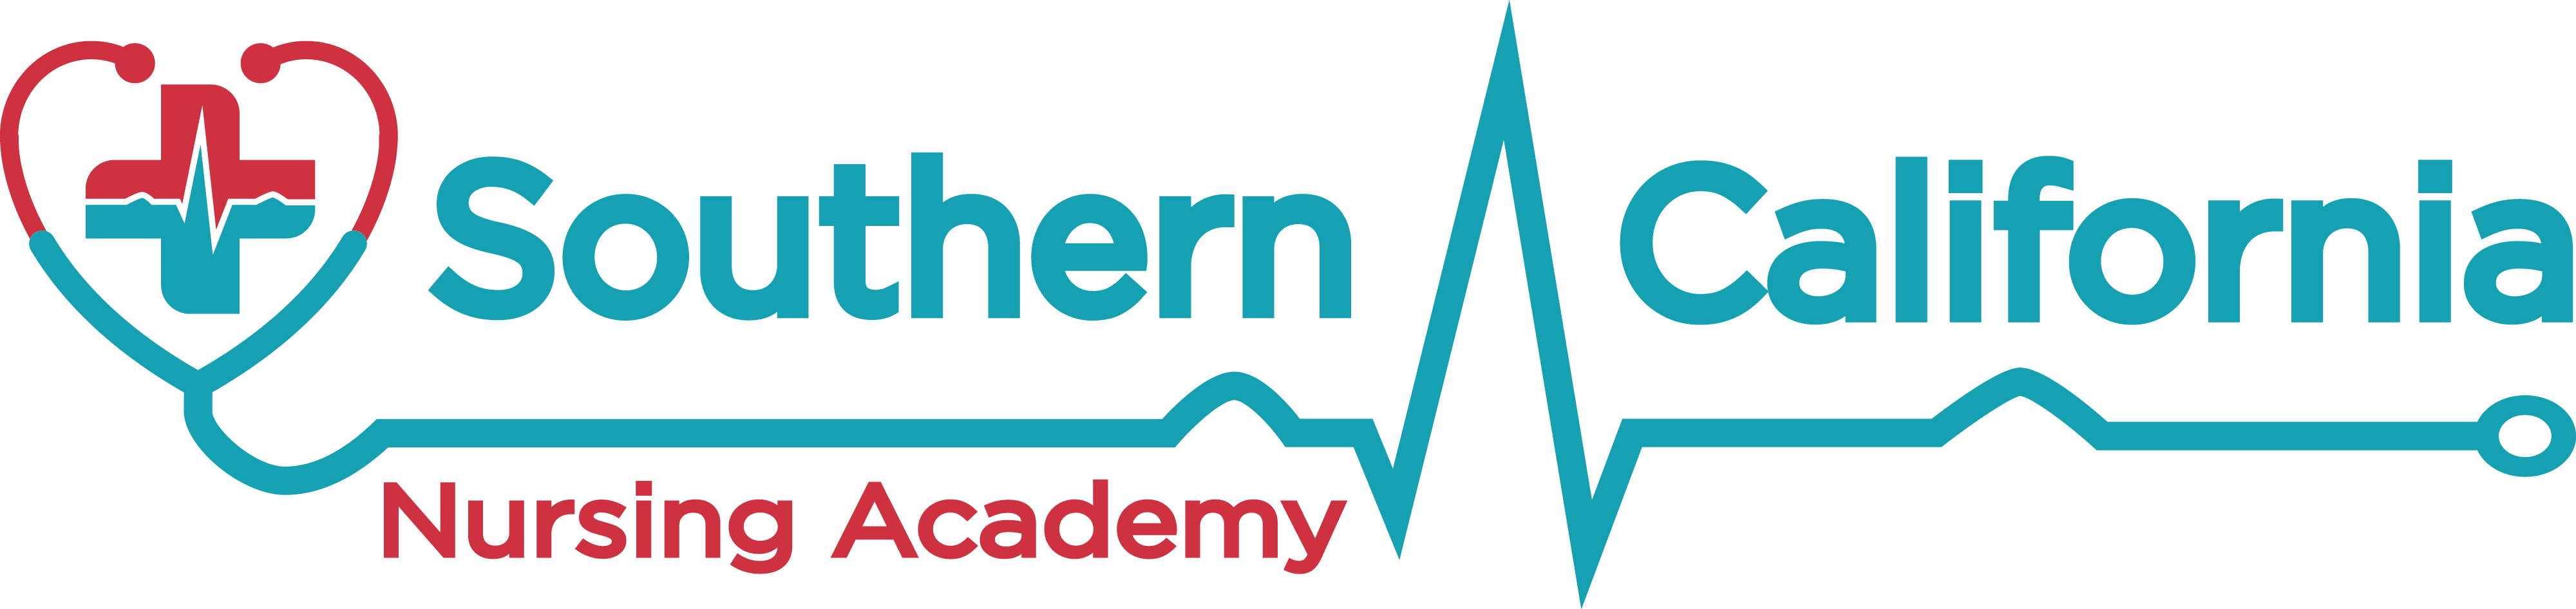 Southern California Nursing Academy, Inc. Logo